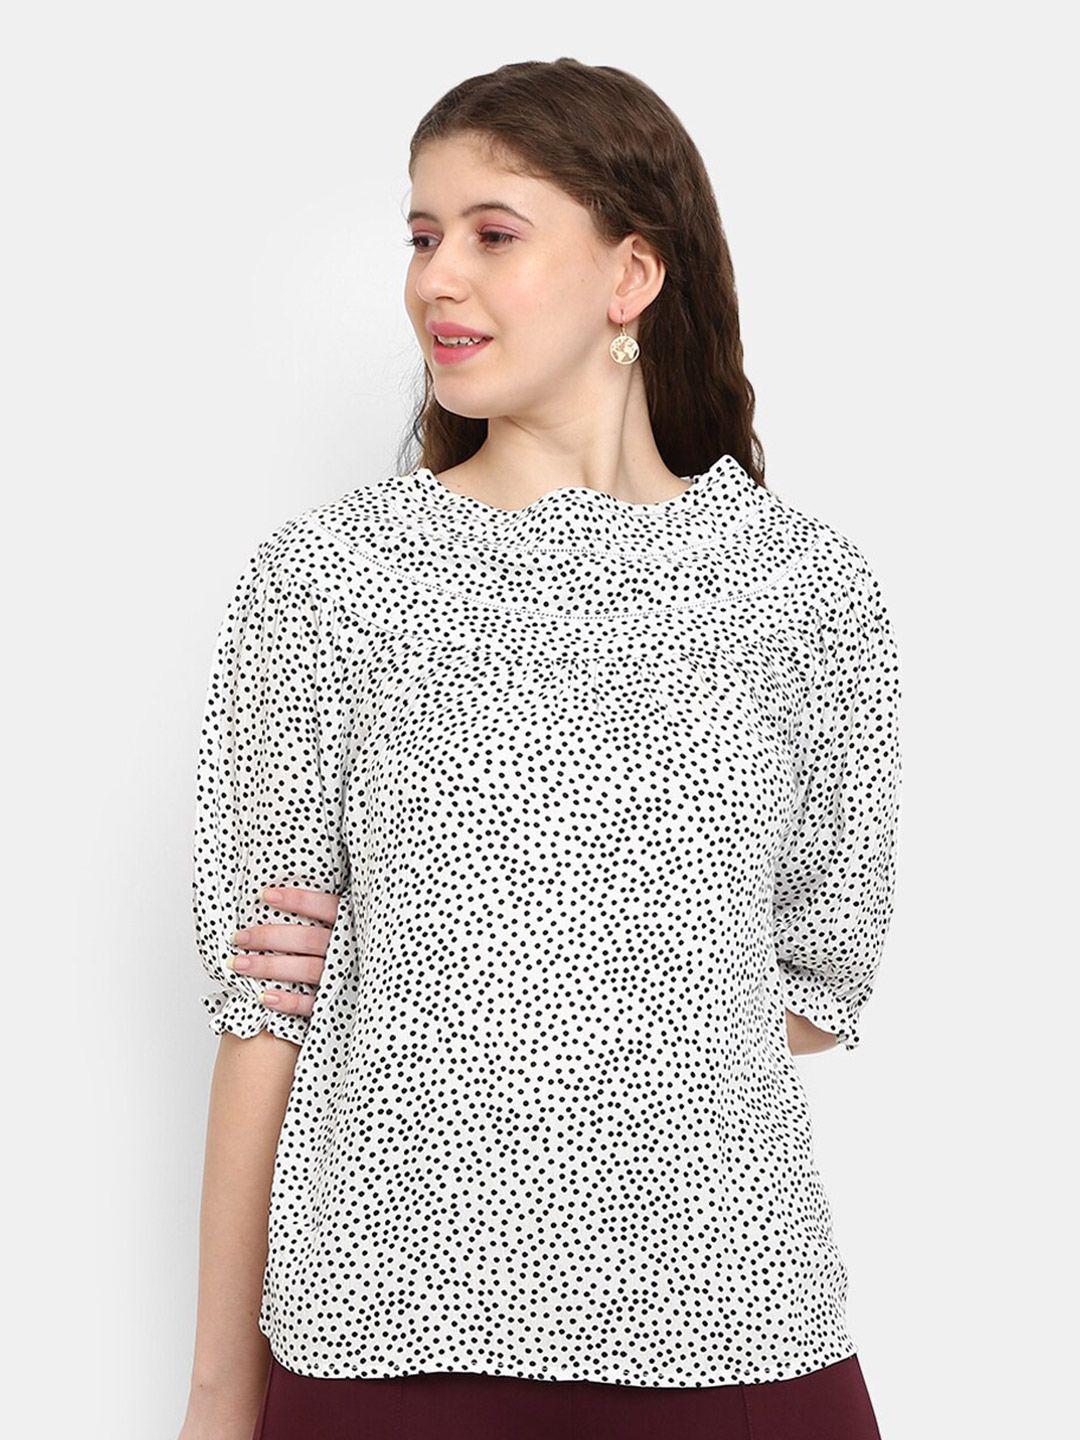 v-mart women white & black polka dots printed pure cotton top